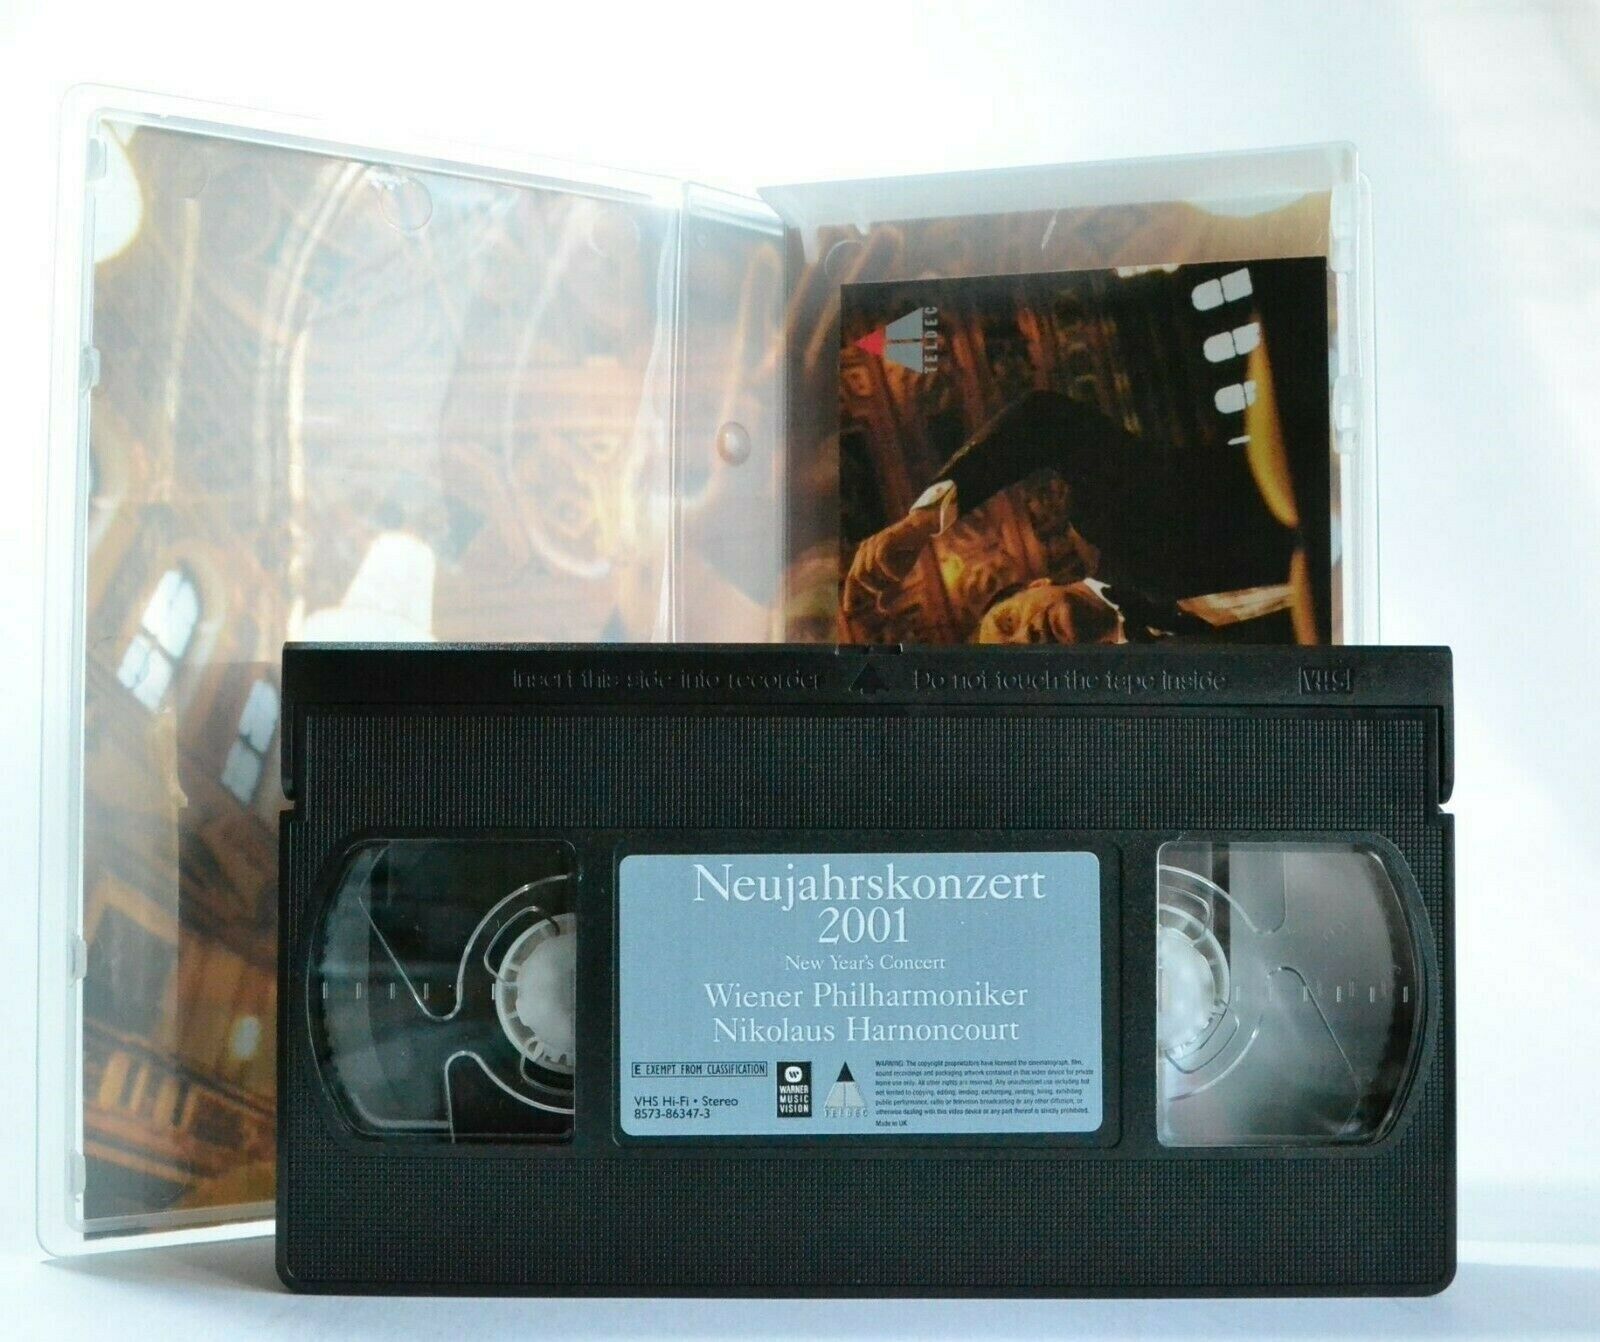 Neujahrskonzert 2001: New Year's Concert - Live Vienna - Classic Music - Pal VHS-